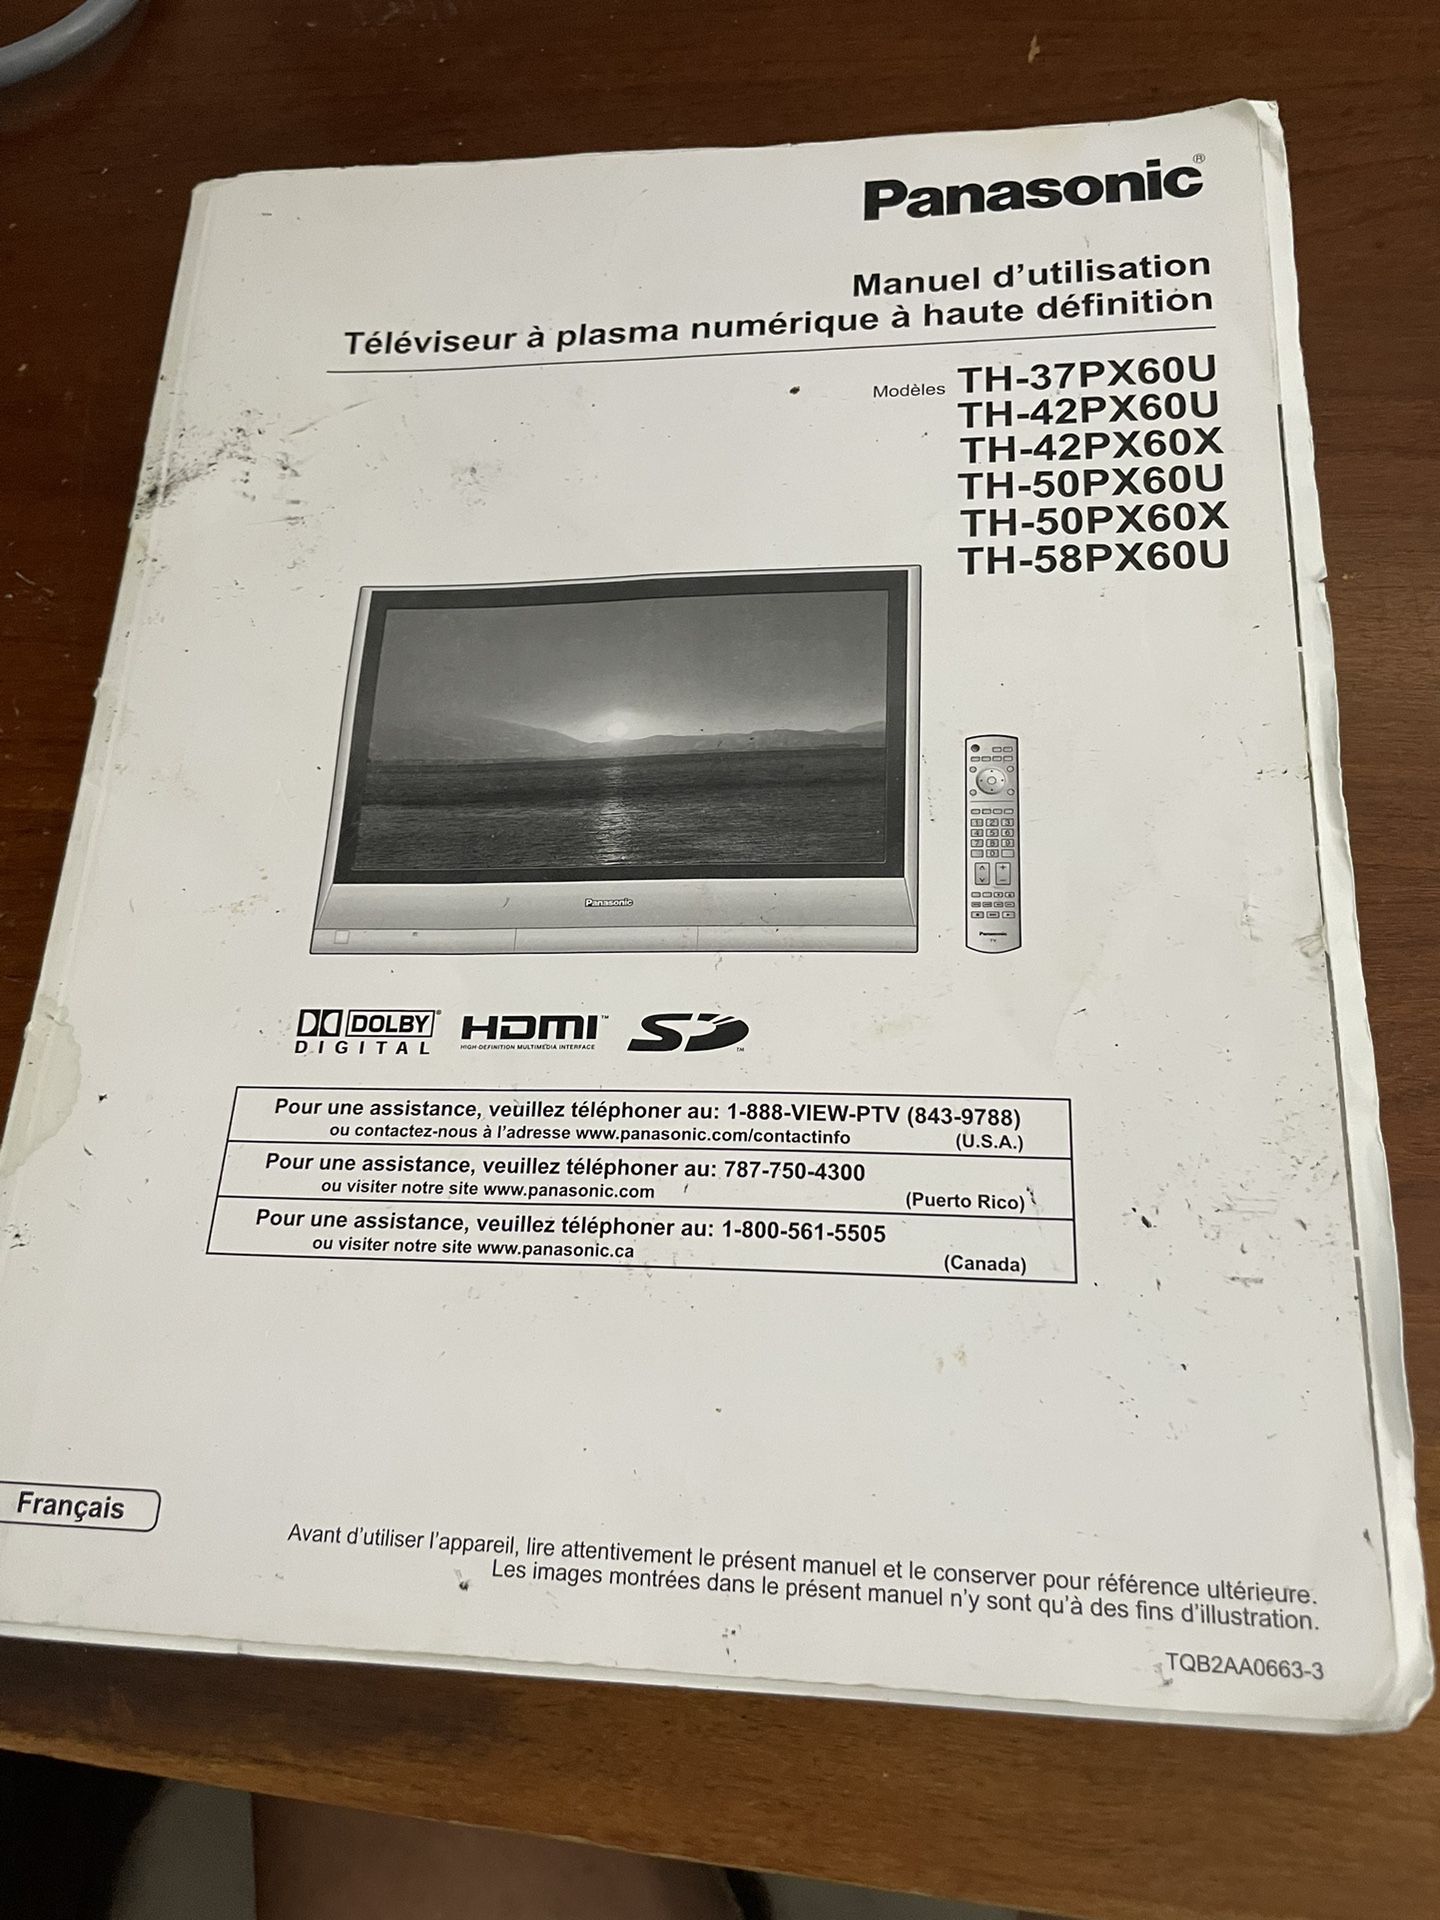 Panasonic TH—42PX60U 42” Plasma TV